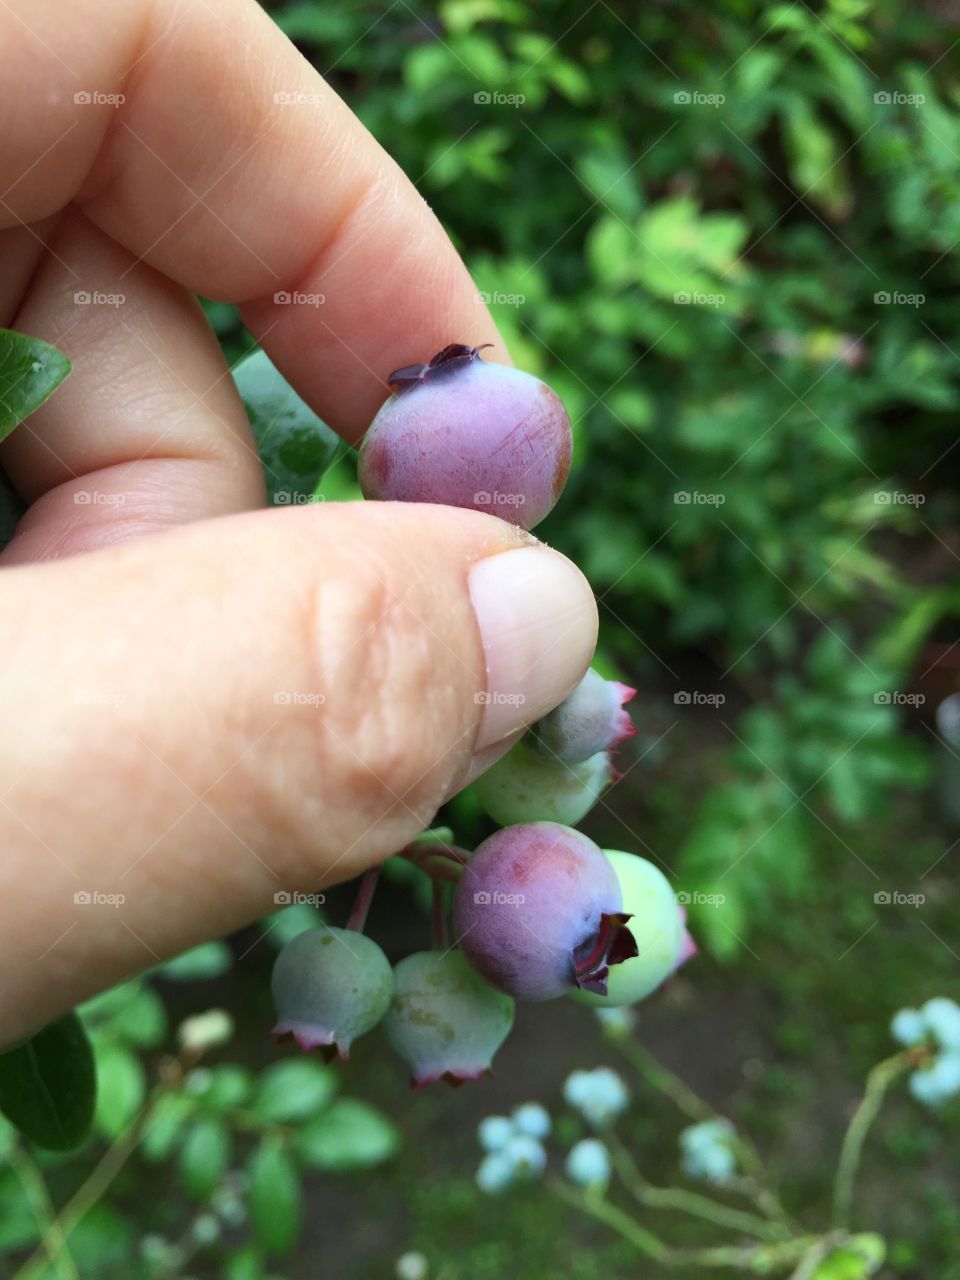 Top hat blueberry harvest